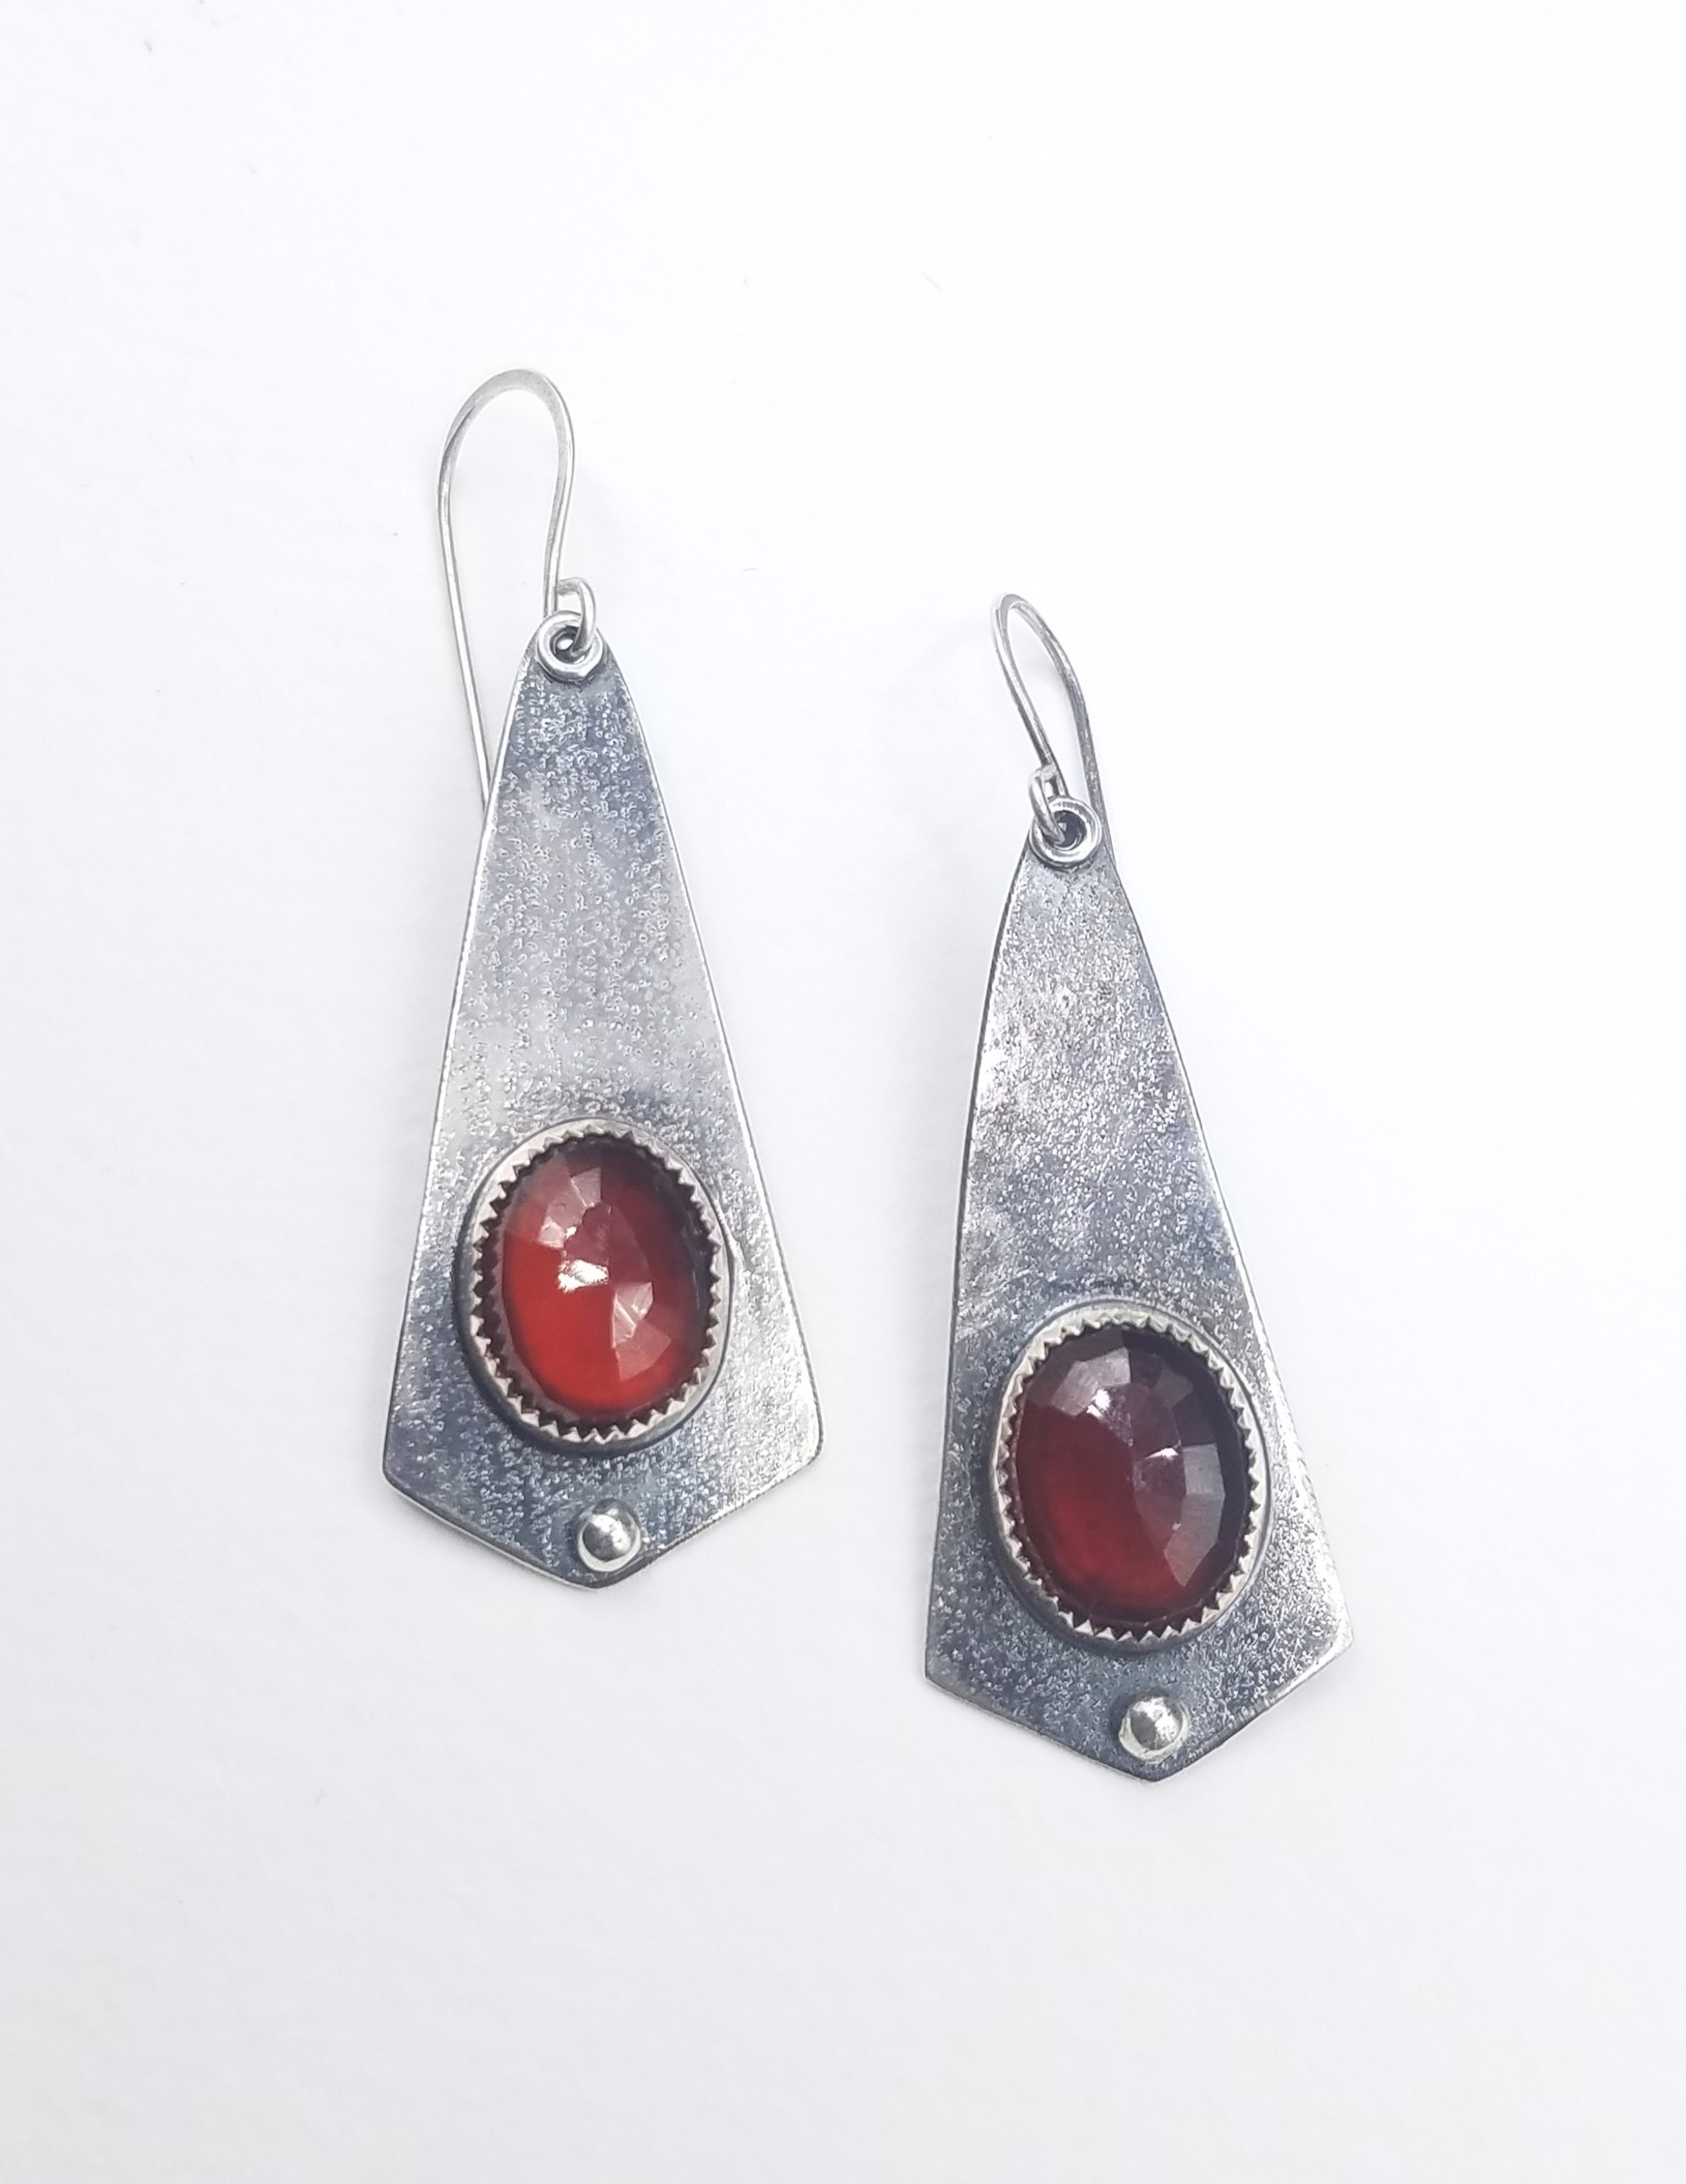 Geometric Hessonite Garnet Earrings by Anita Shuler